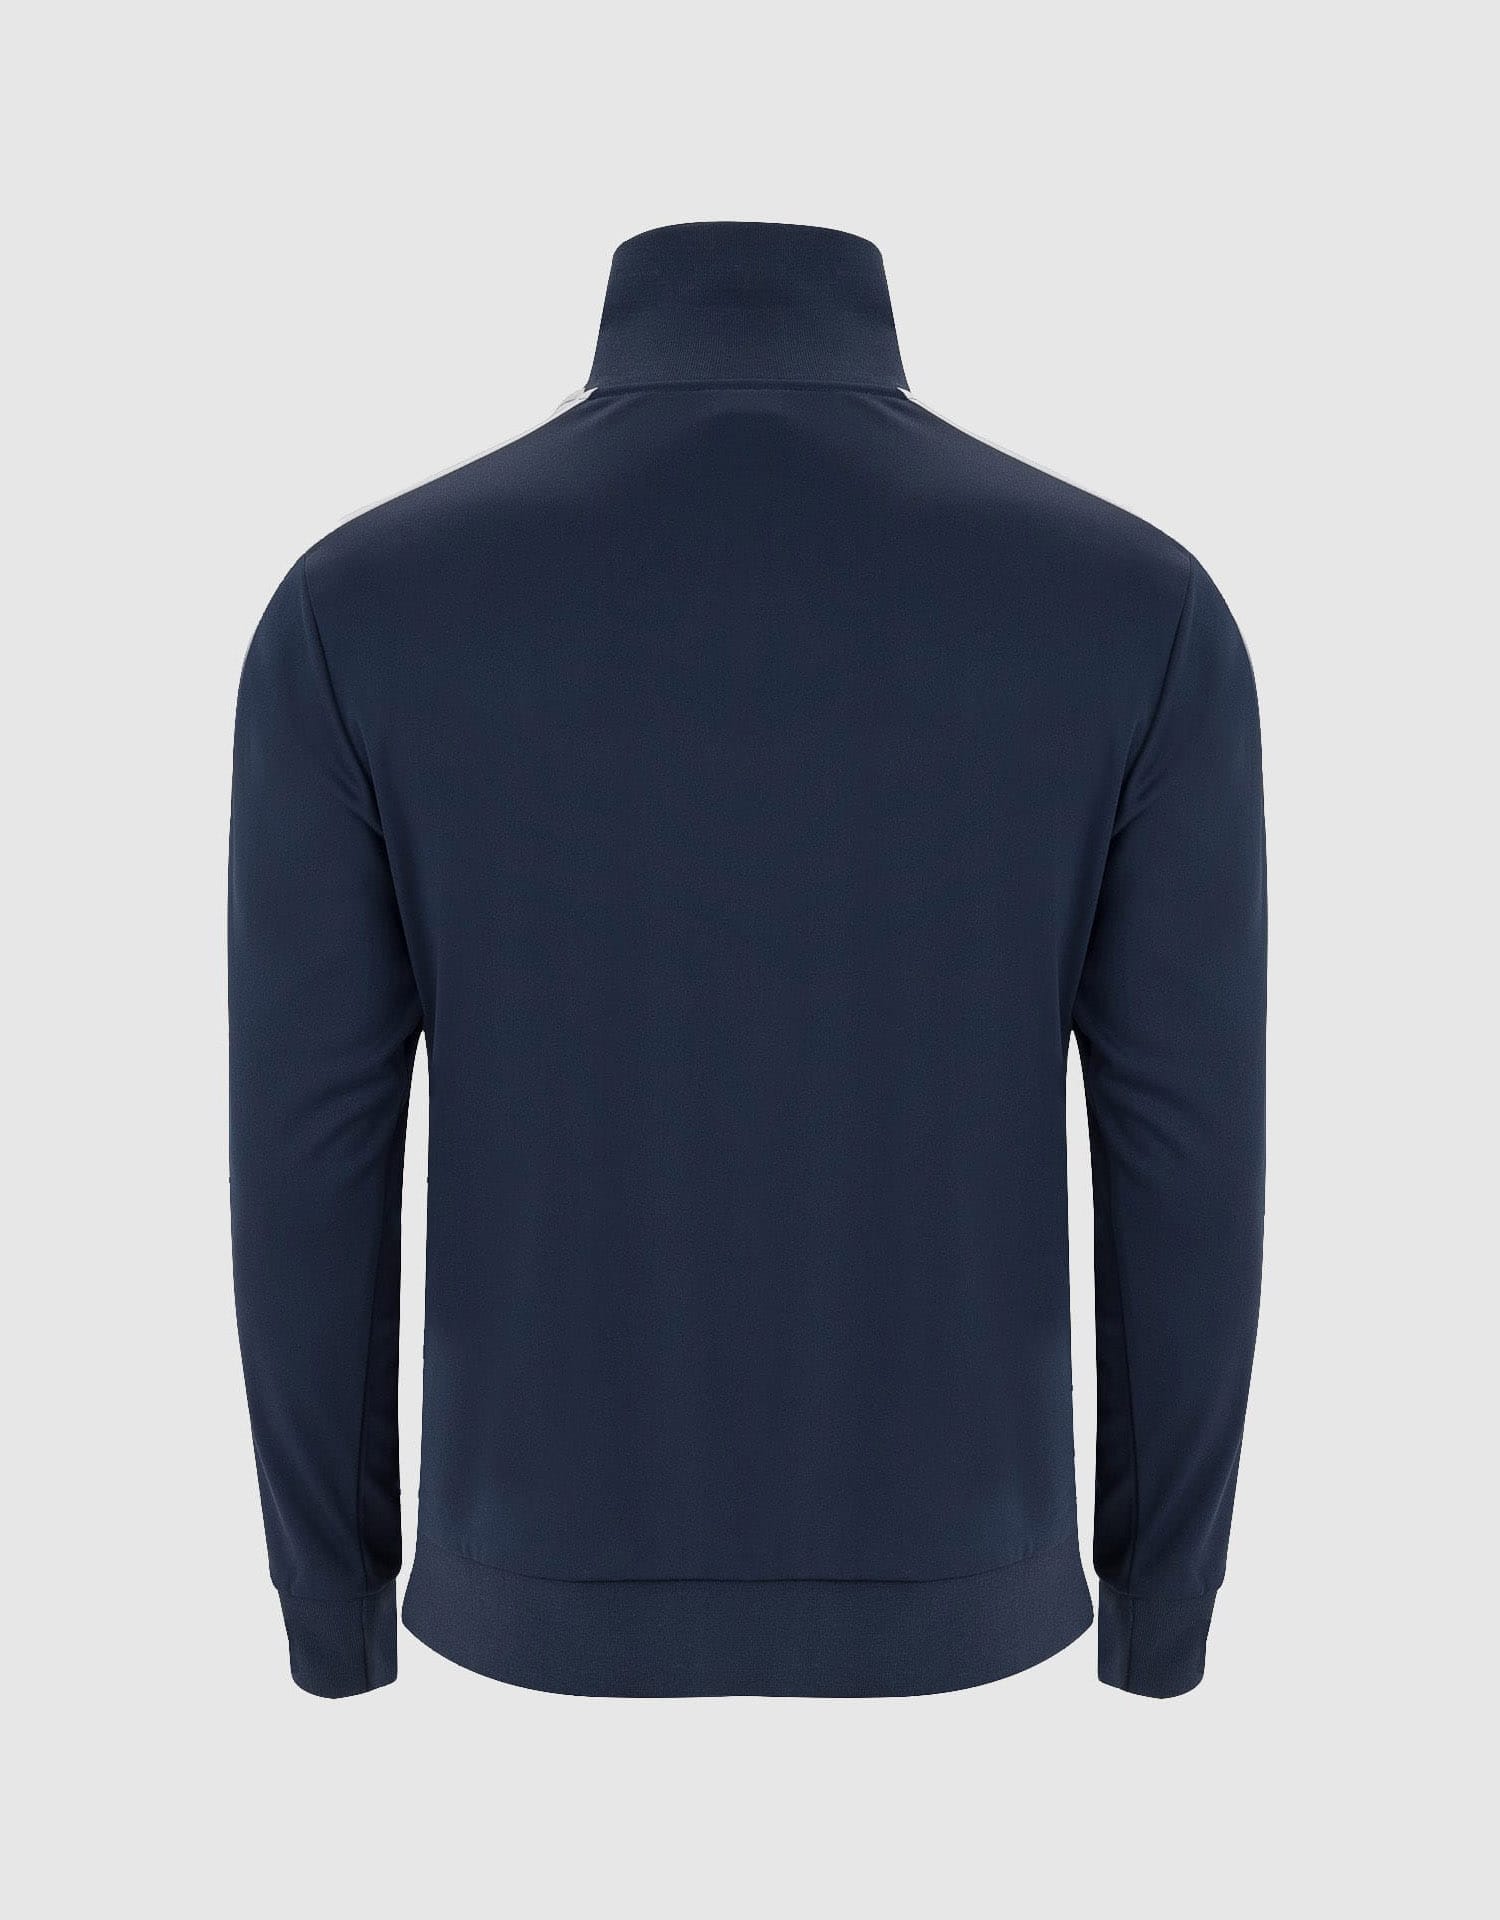 ninesquared-new-marco-sweater-blue-bk-U